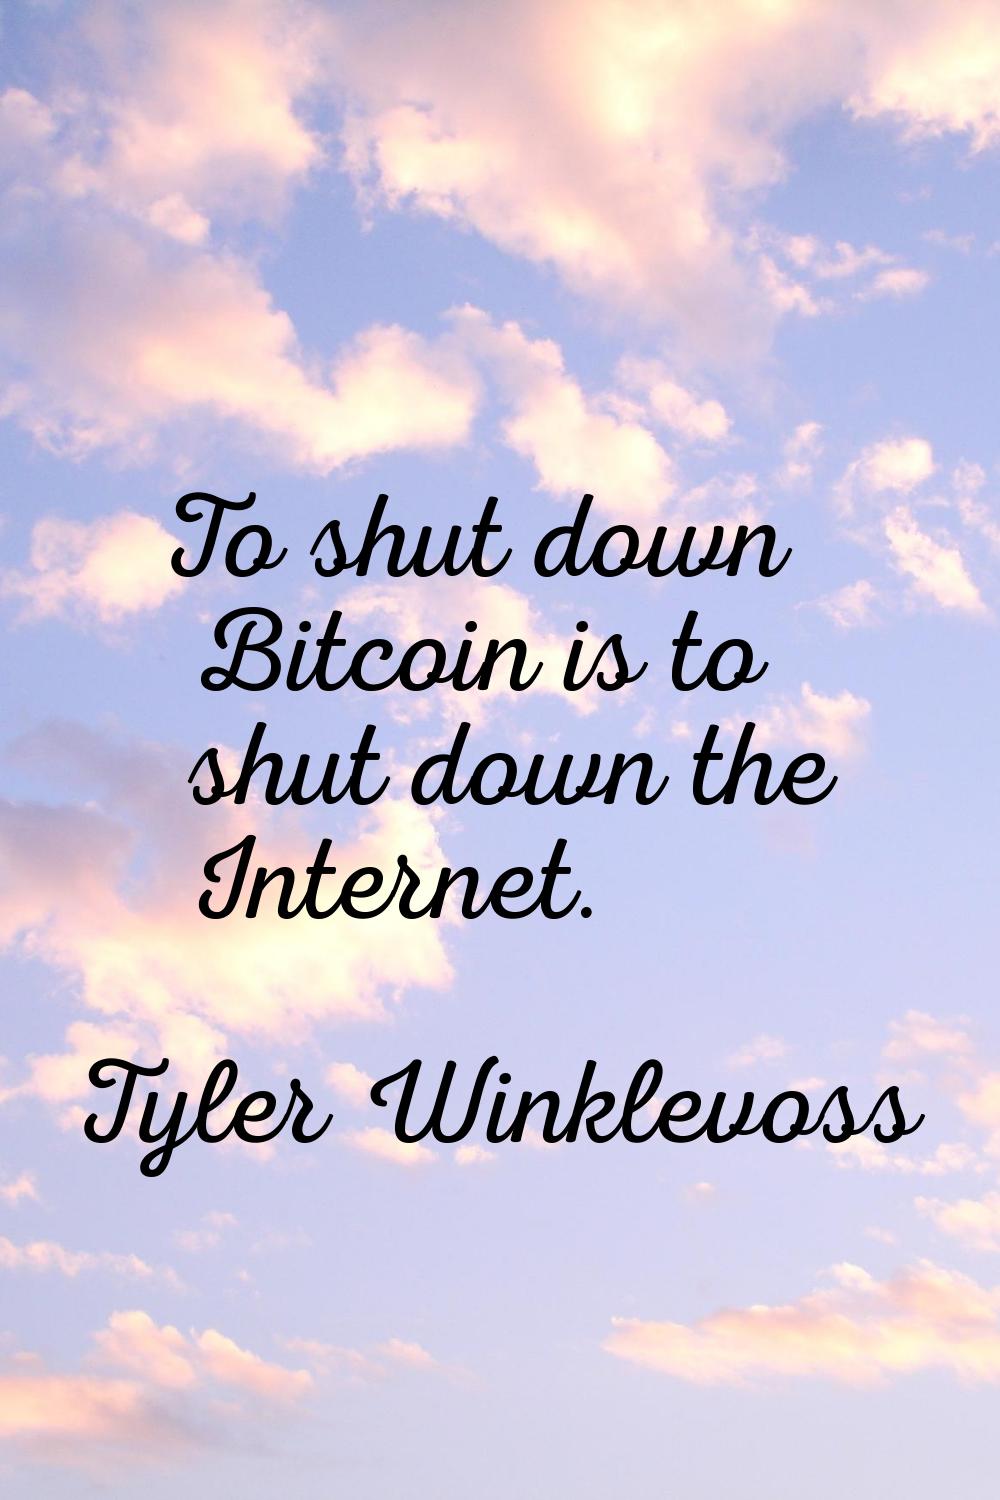 To shut down Bitcoin is to shut down the Internet.